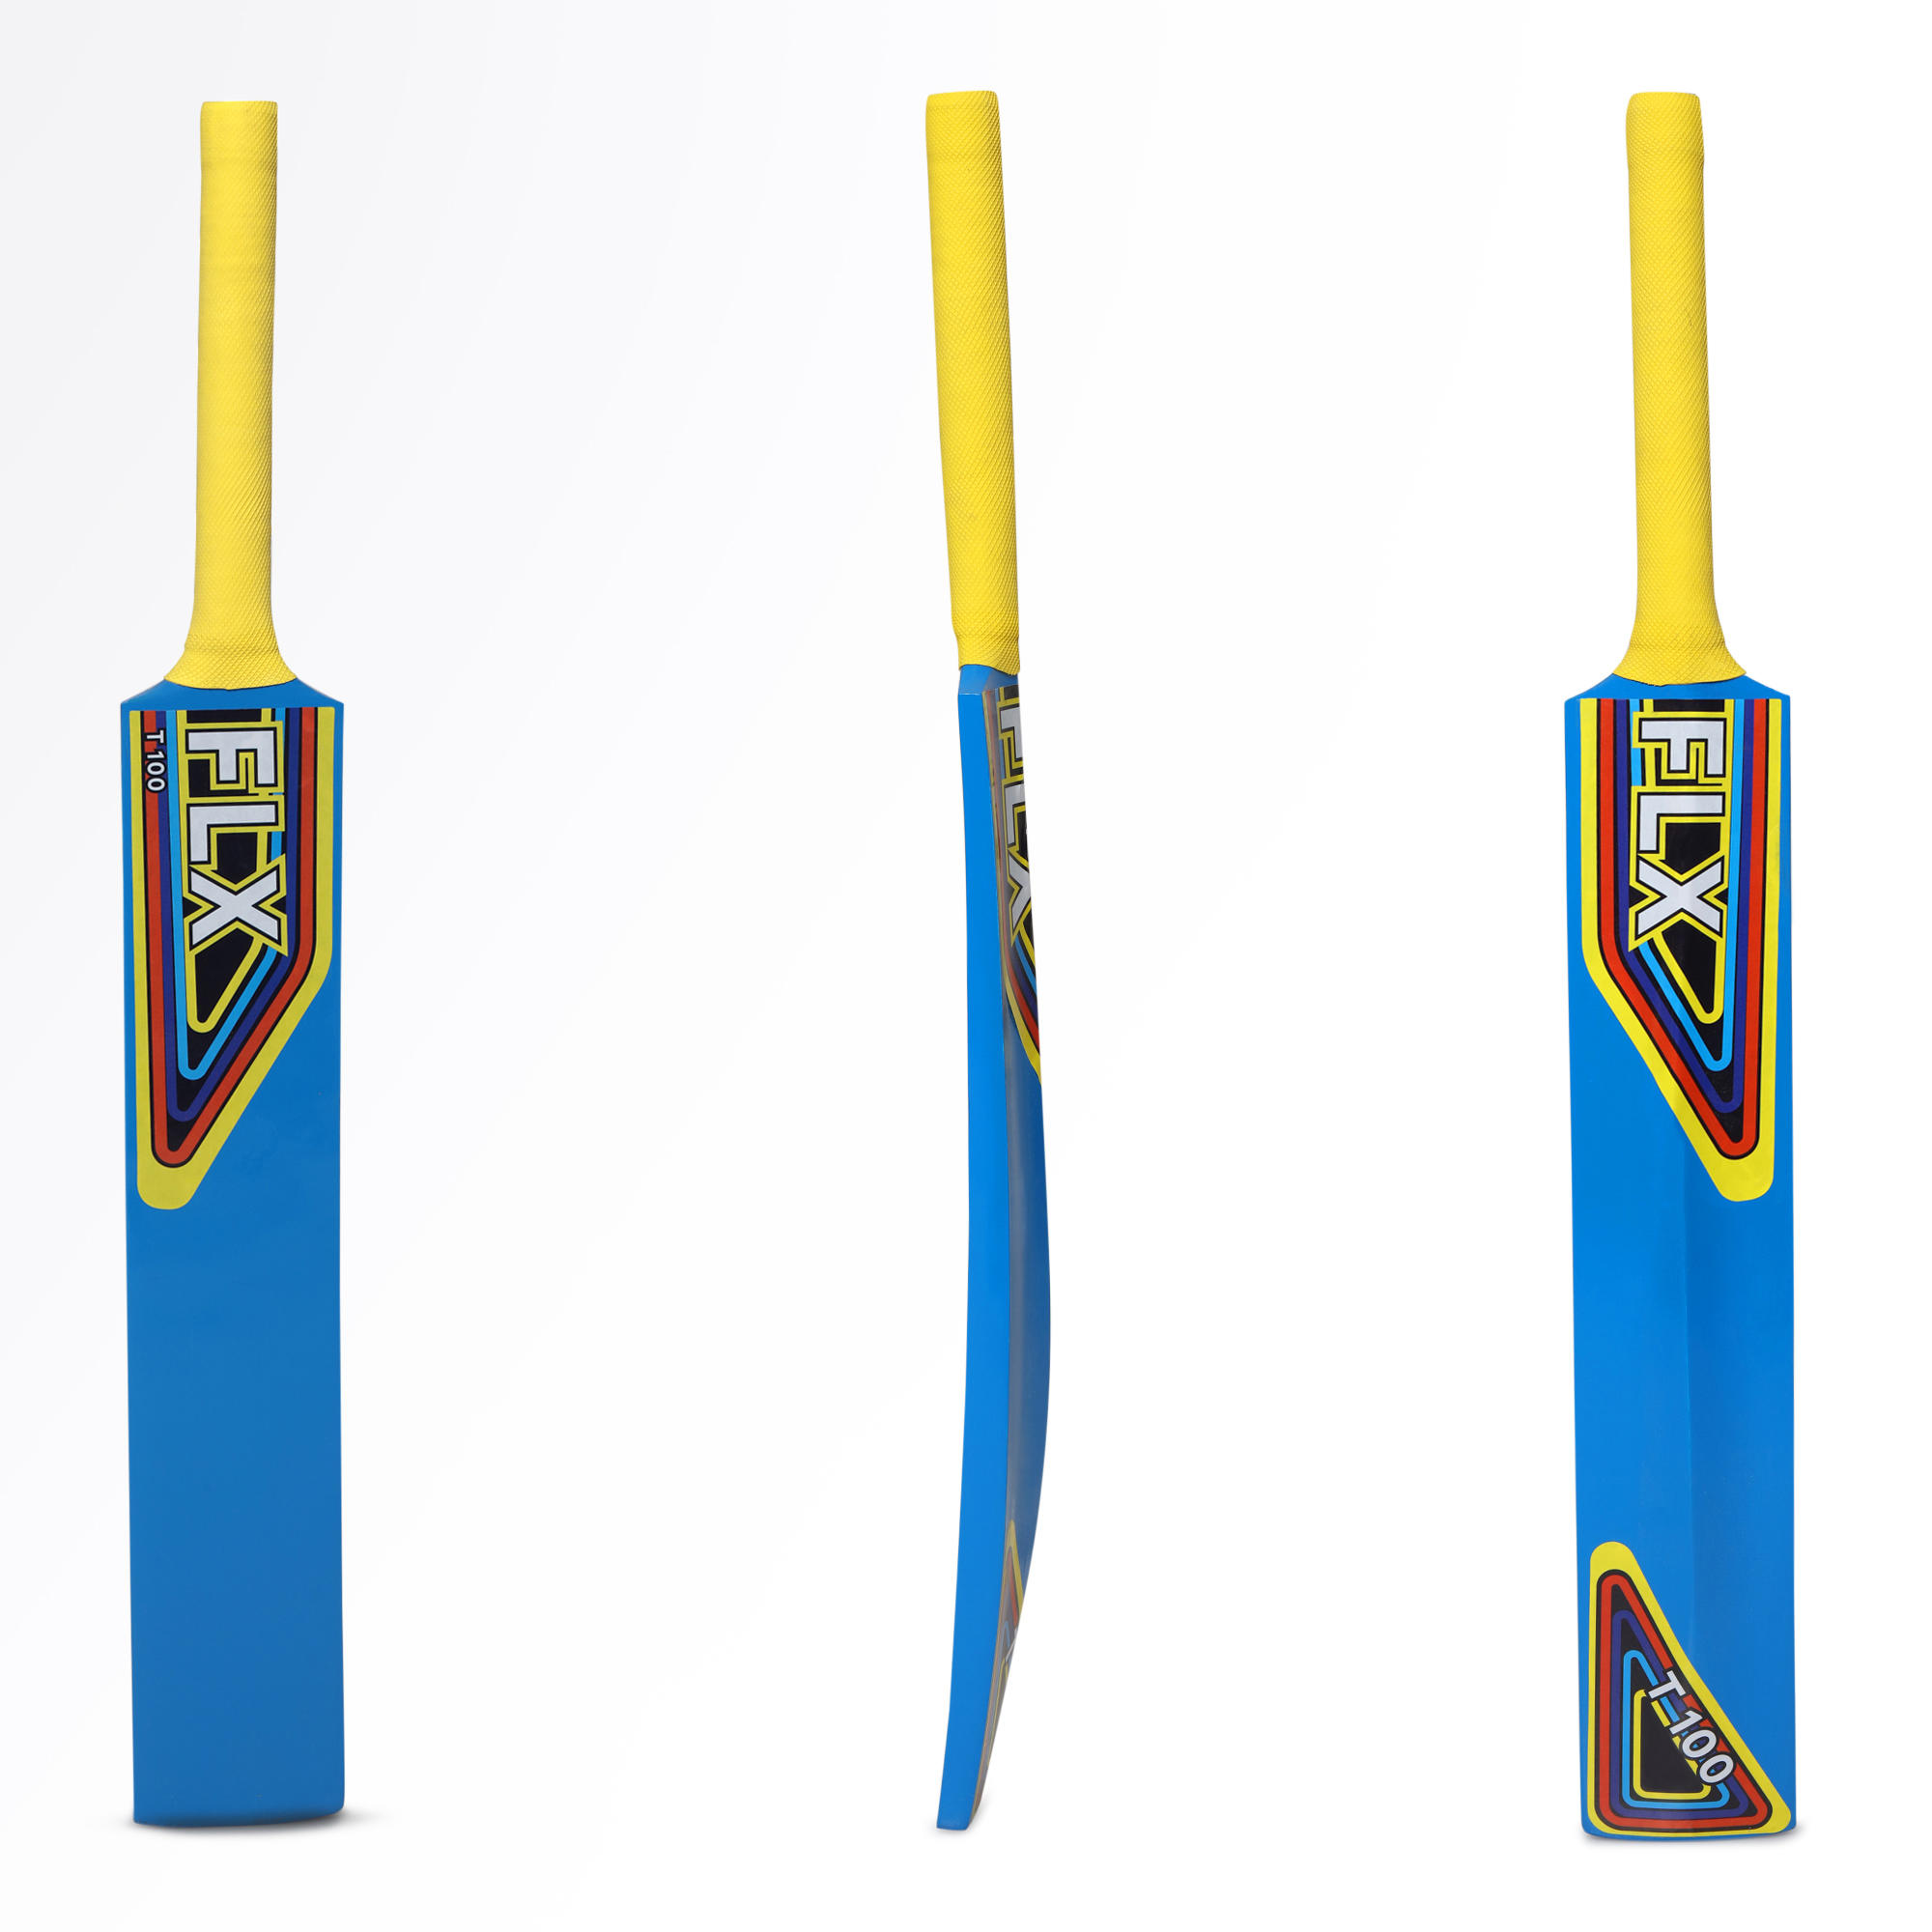 flx tennis cricket bat